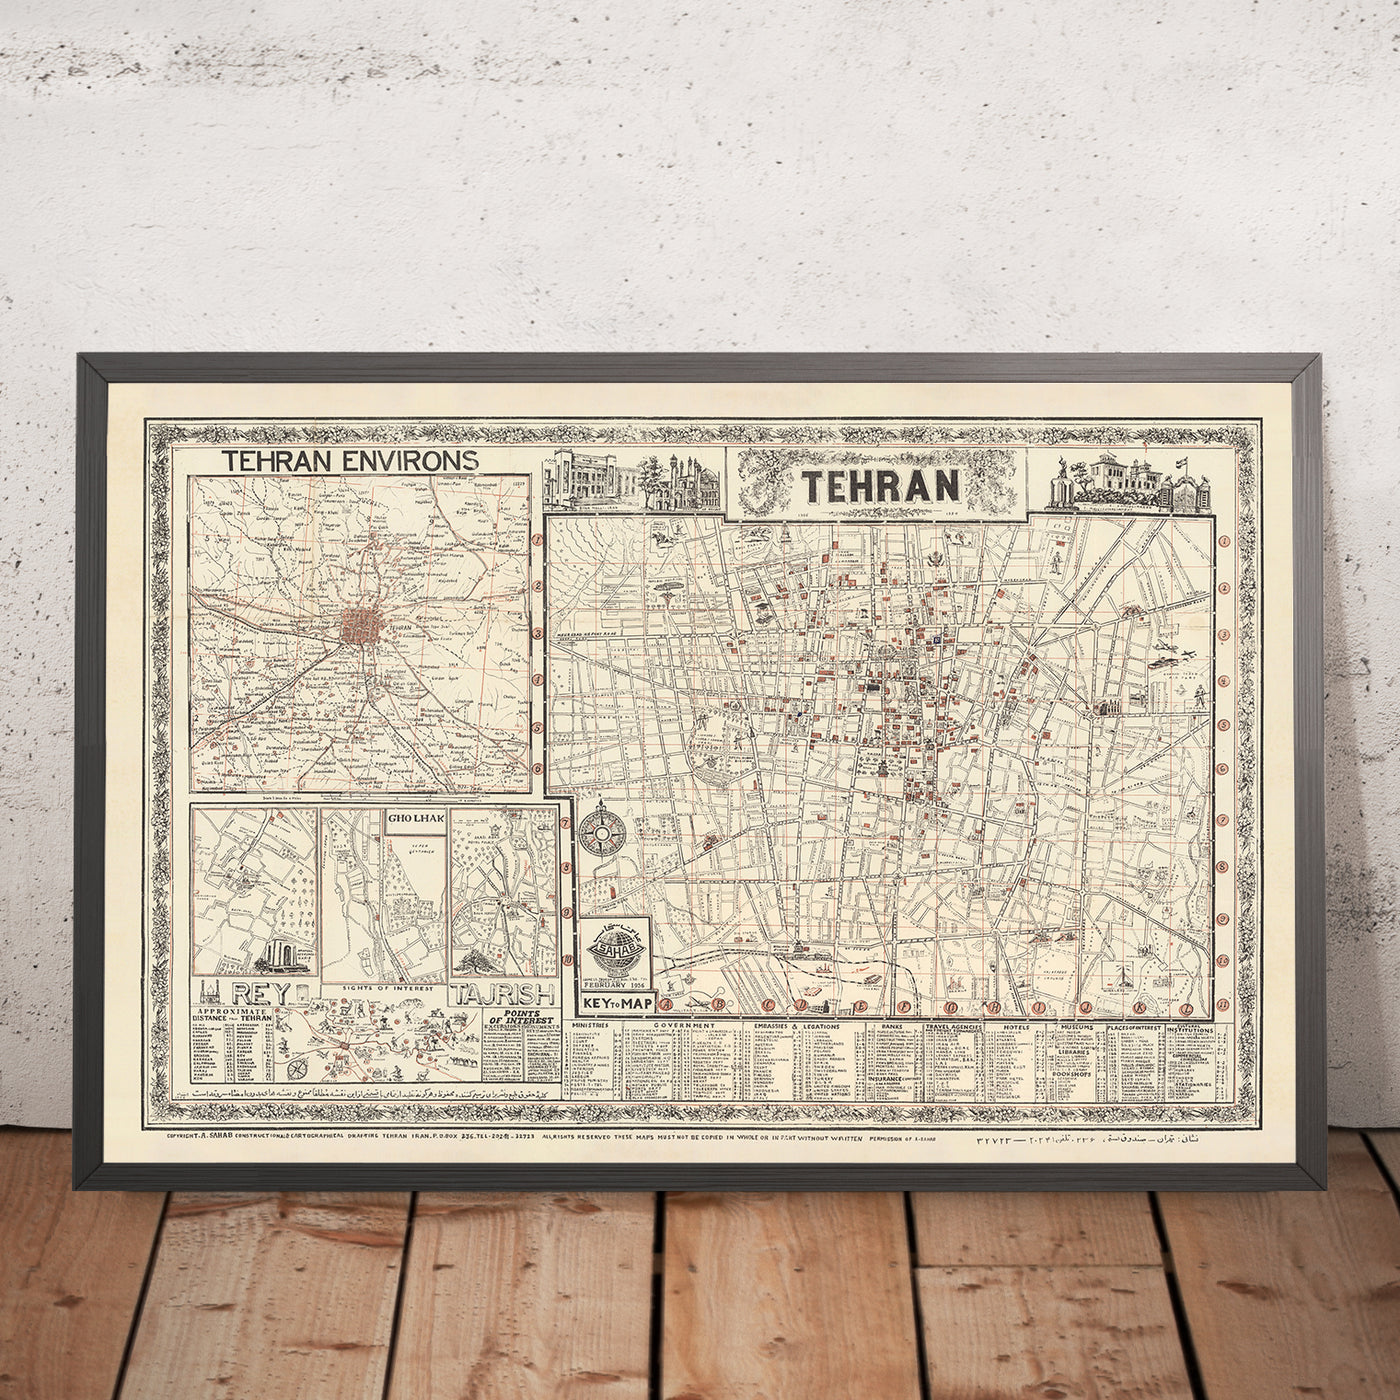 Old Map of Tehran by Sahab Abbas, 1956: Mehran, Bazaar, Abouzar, Sadeghiyeh